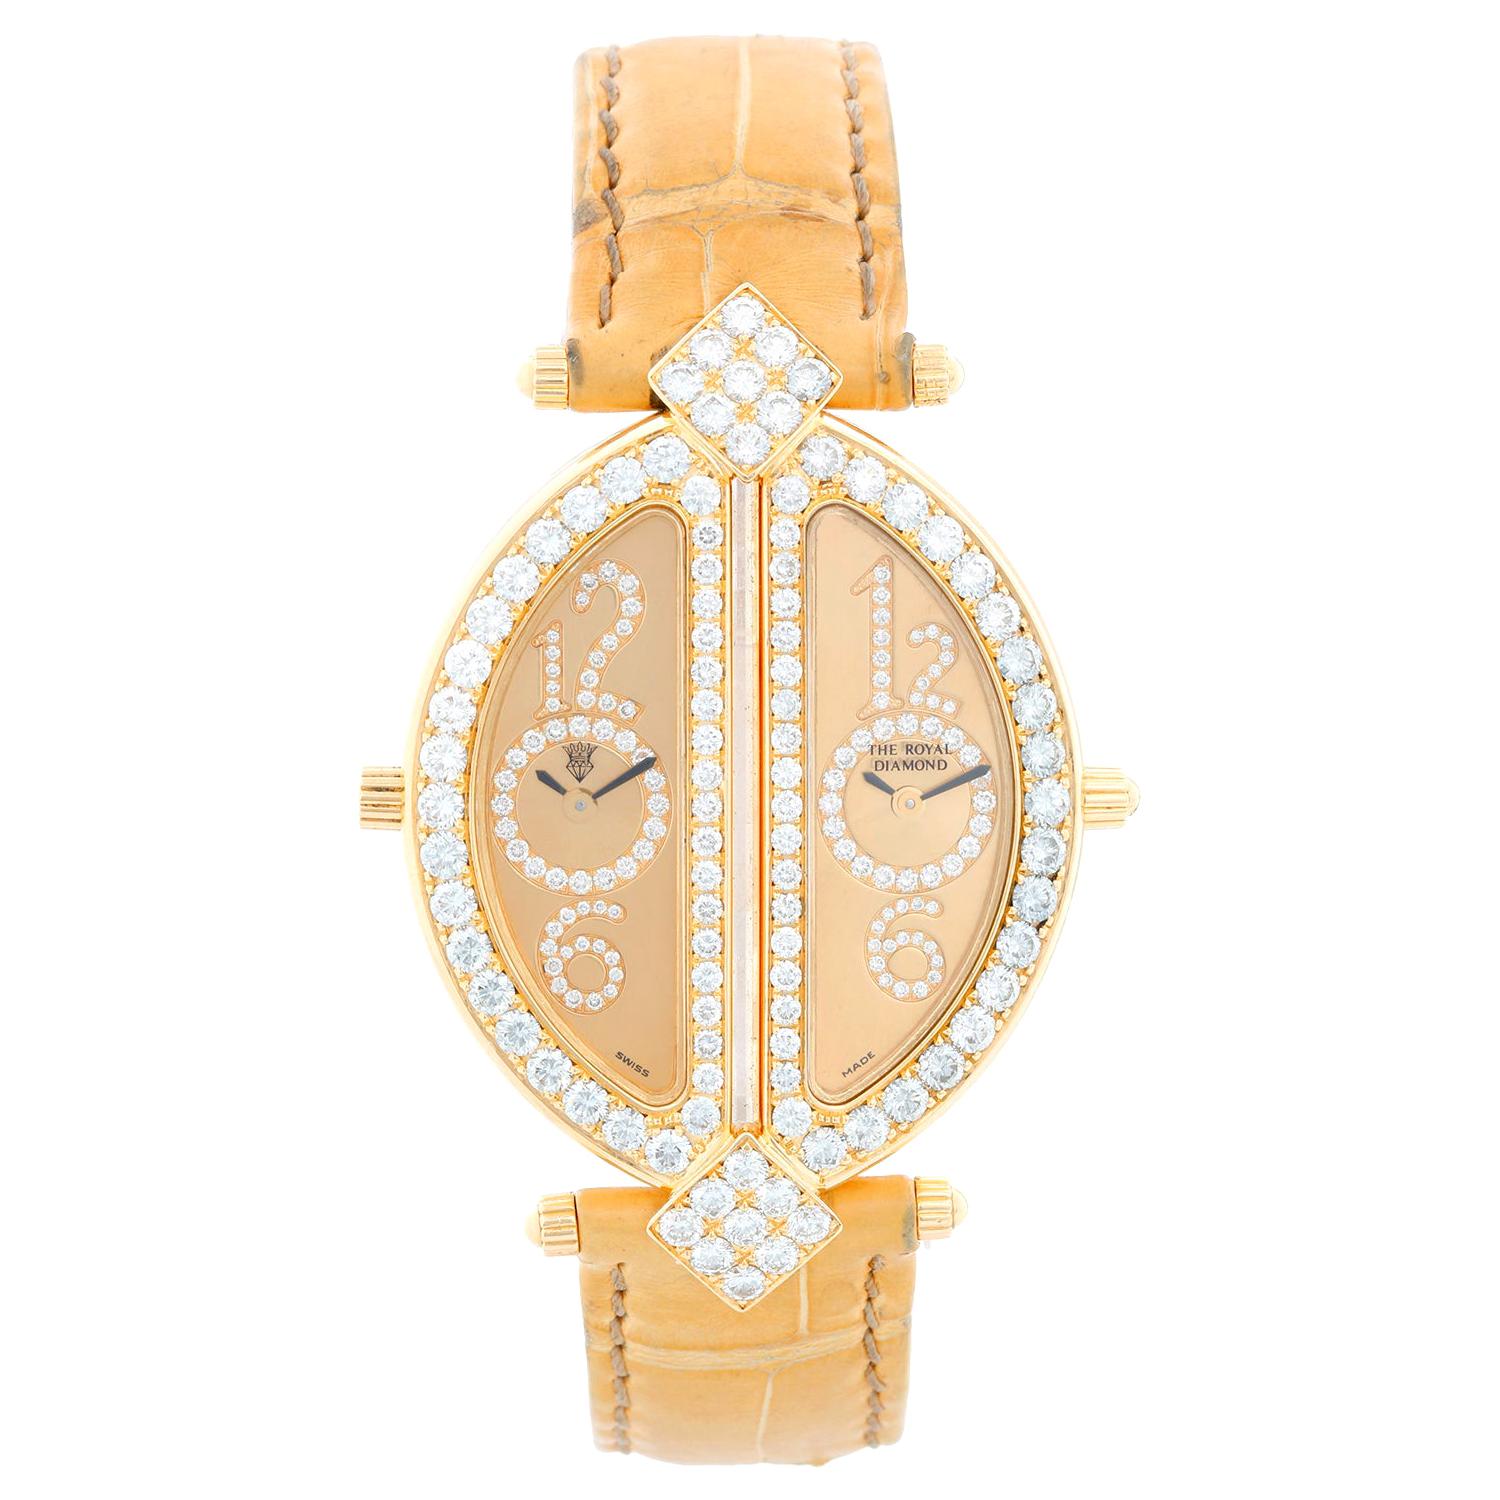 Chatila "The Royal Diamond Double Lady" Dual Time Ladies 18 Karat Gold Watch BA